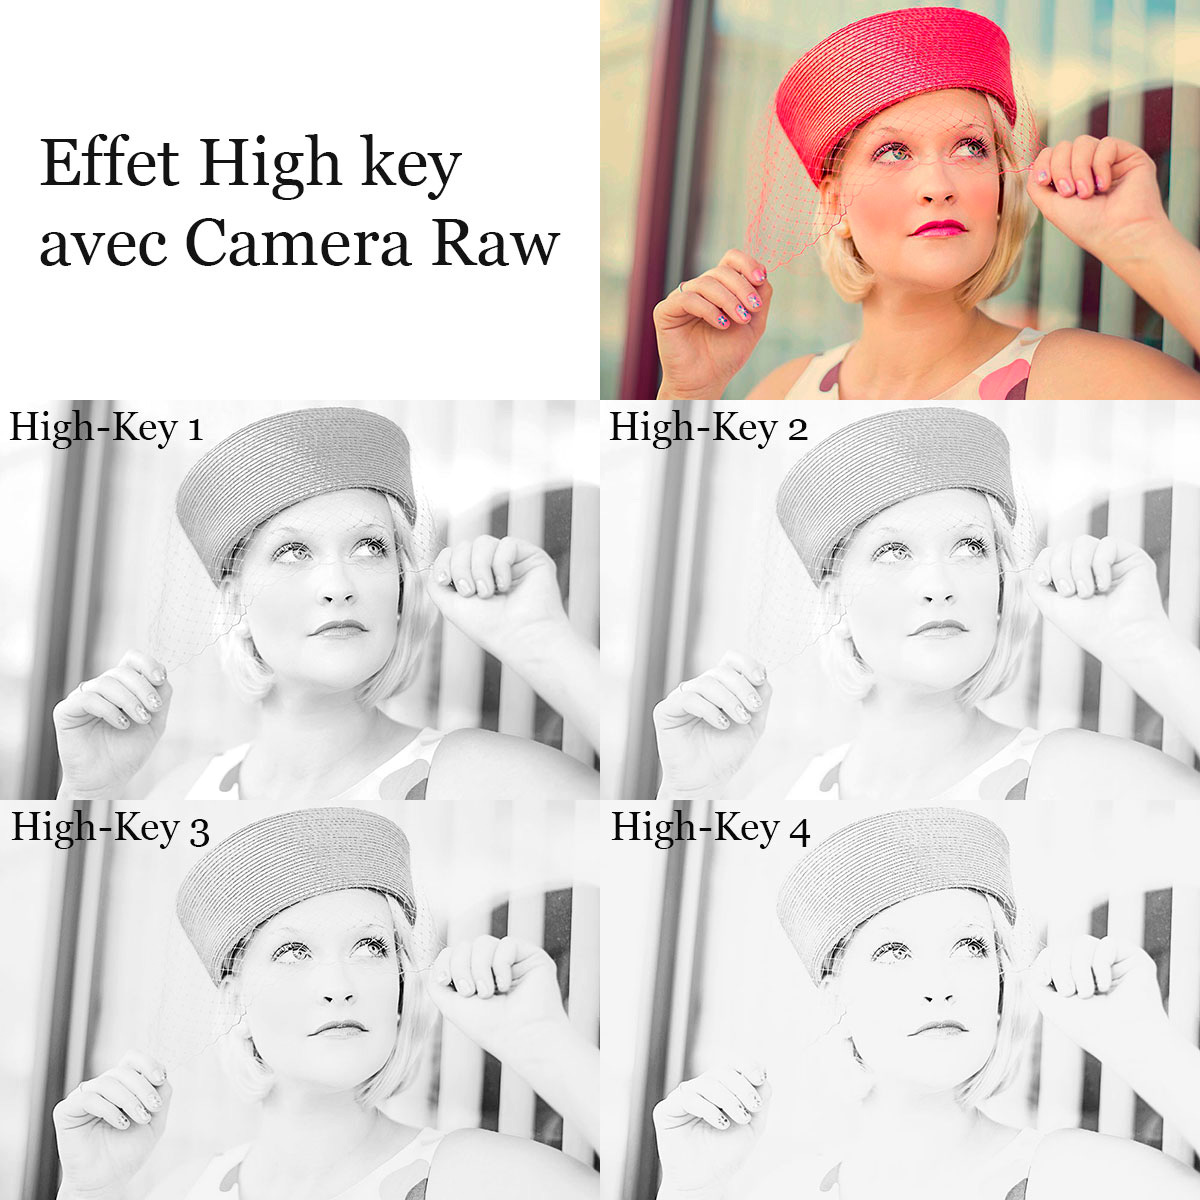 Effet Hight key avec Camera Raw